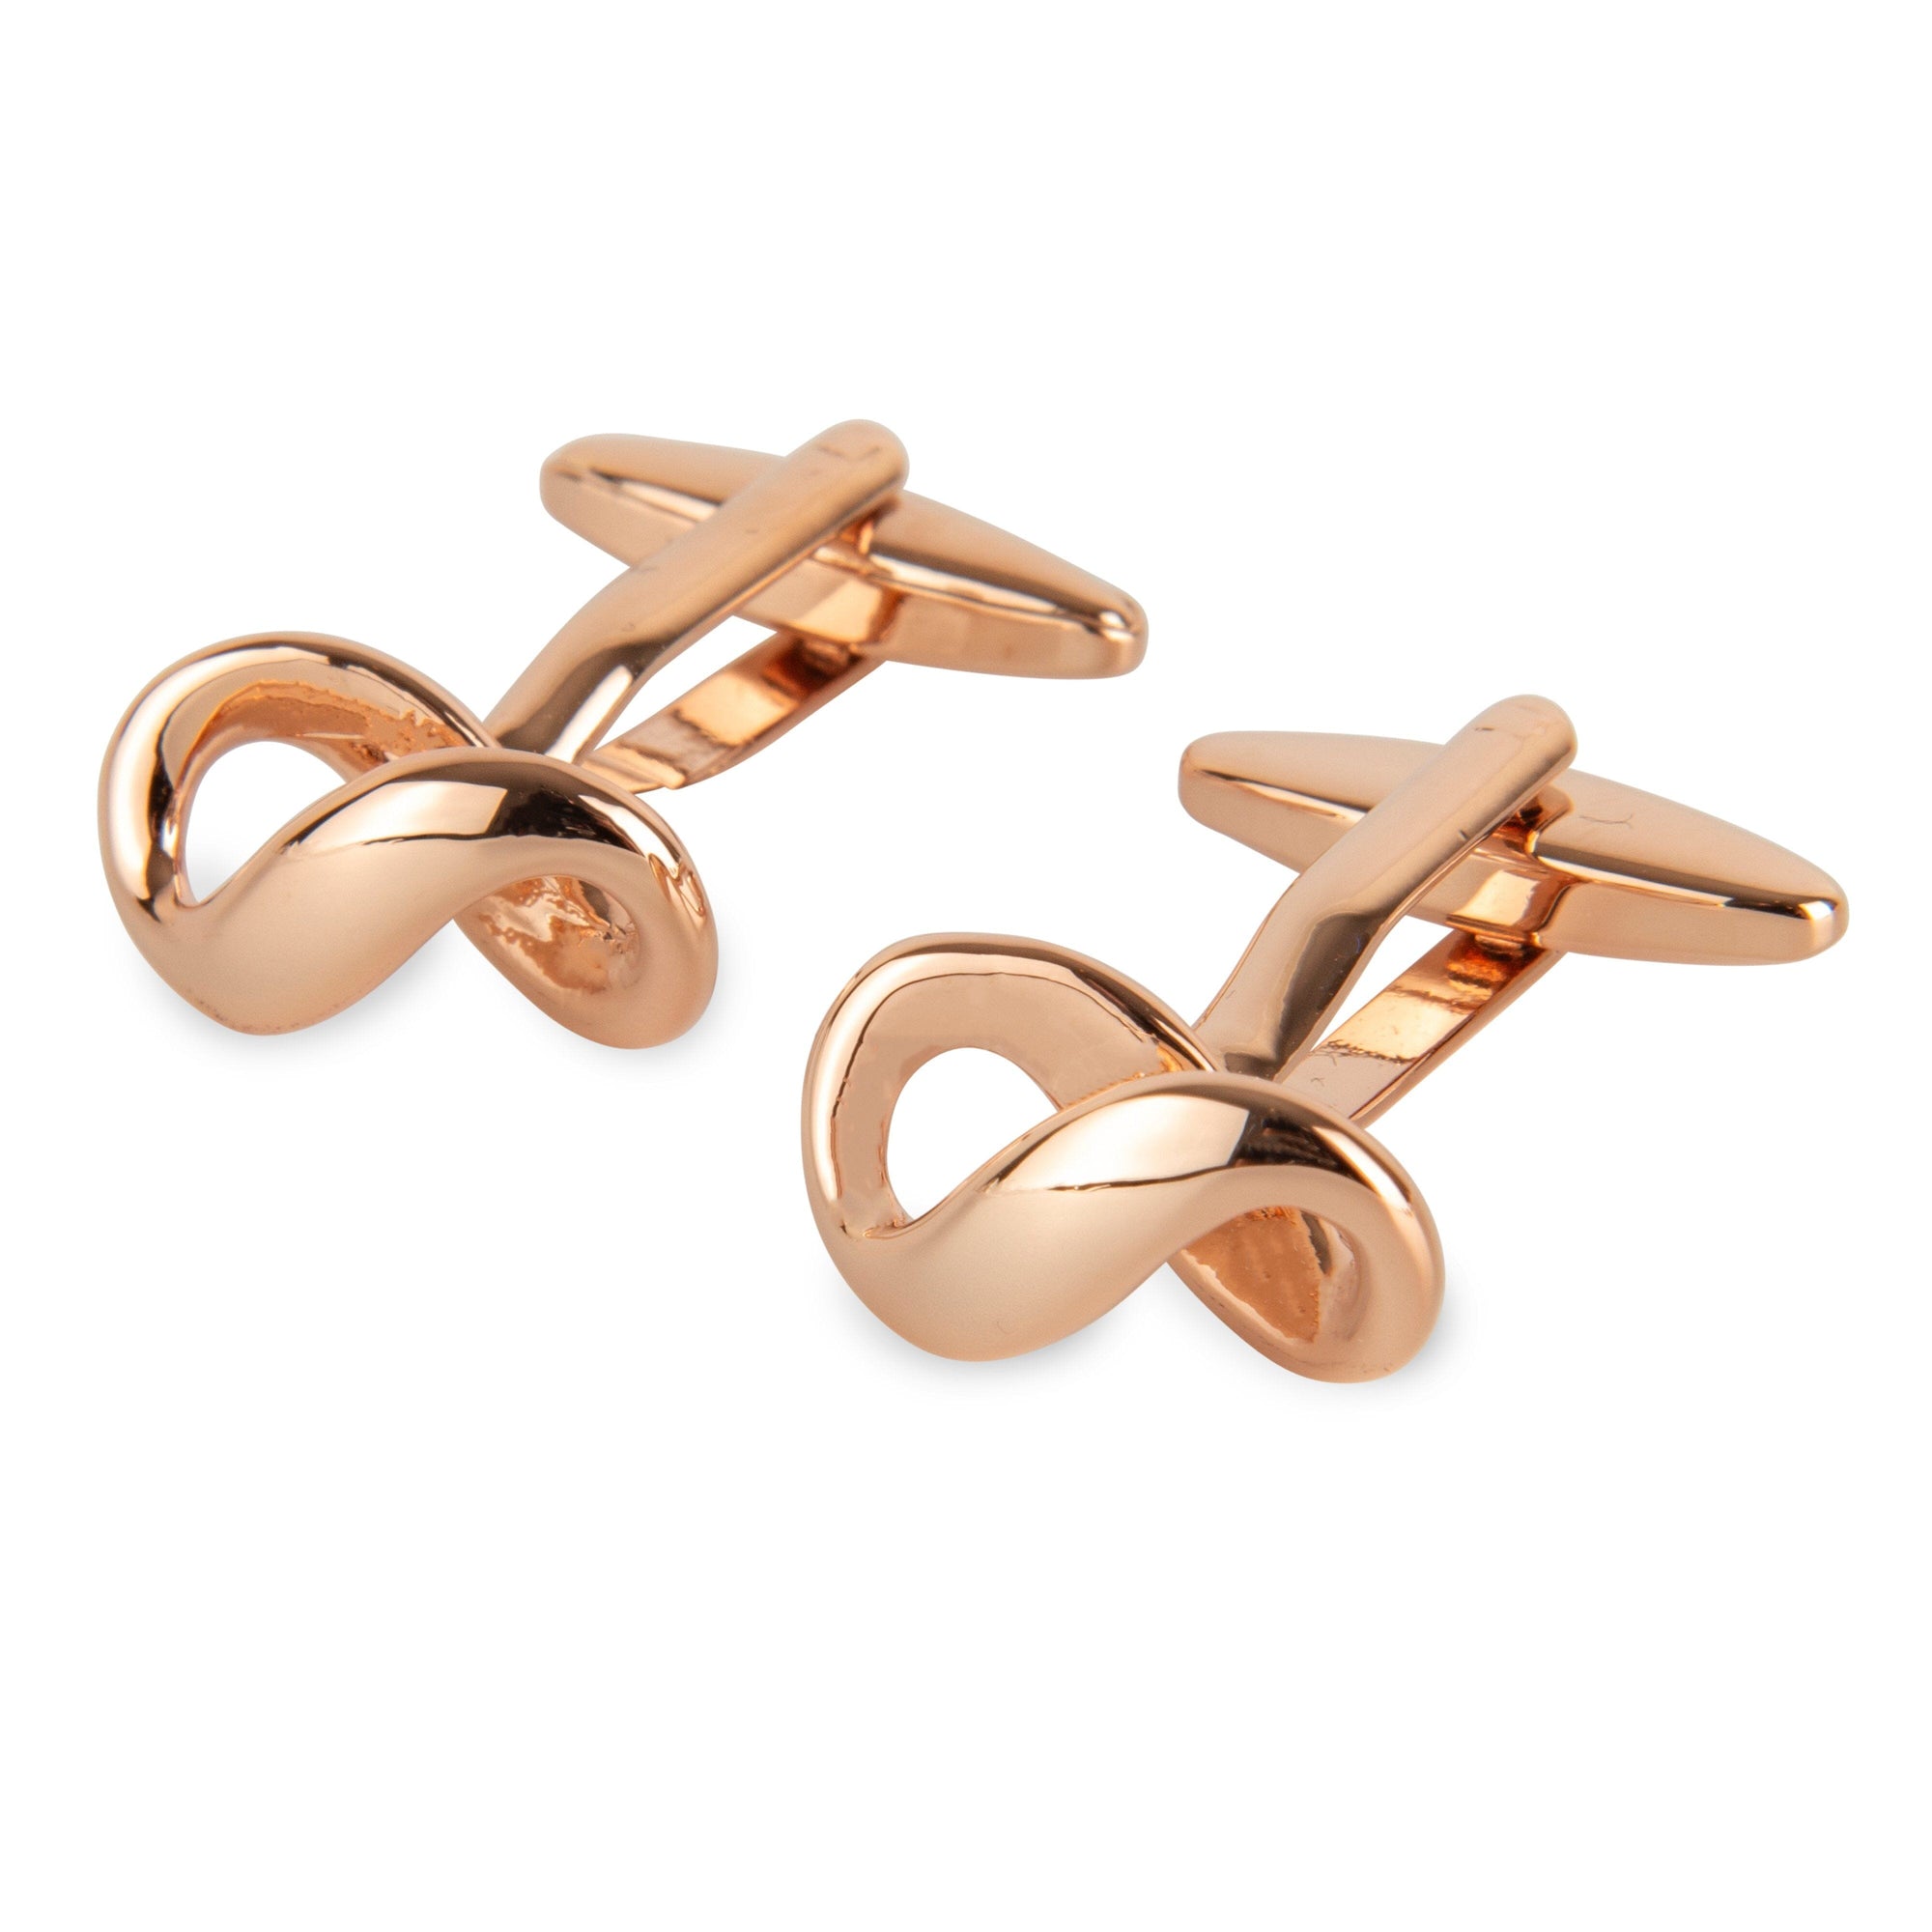 Rose Gold Infinity Symbol Cufflinks Novelty Cufflinks Clinks Australia Rose Gold Infinity Symbol Cufflinks 